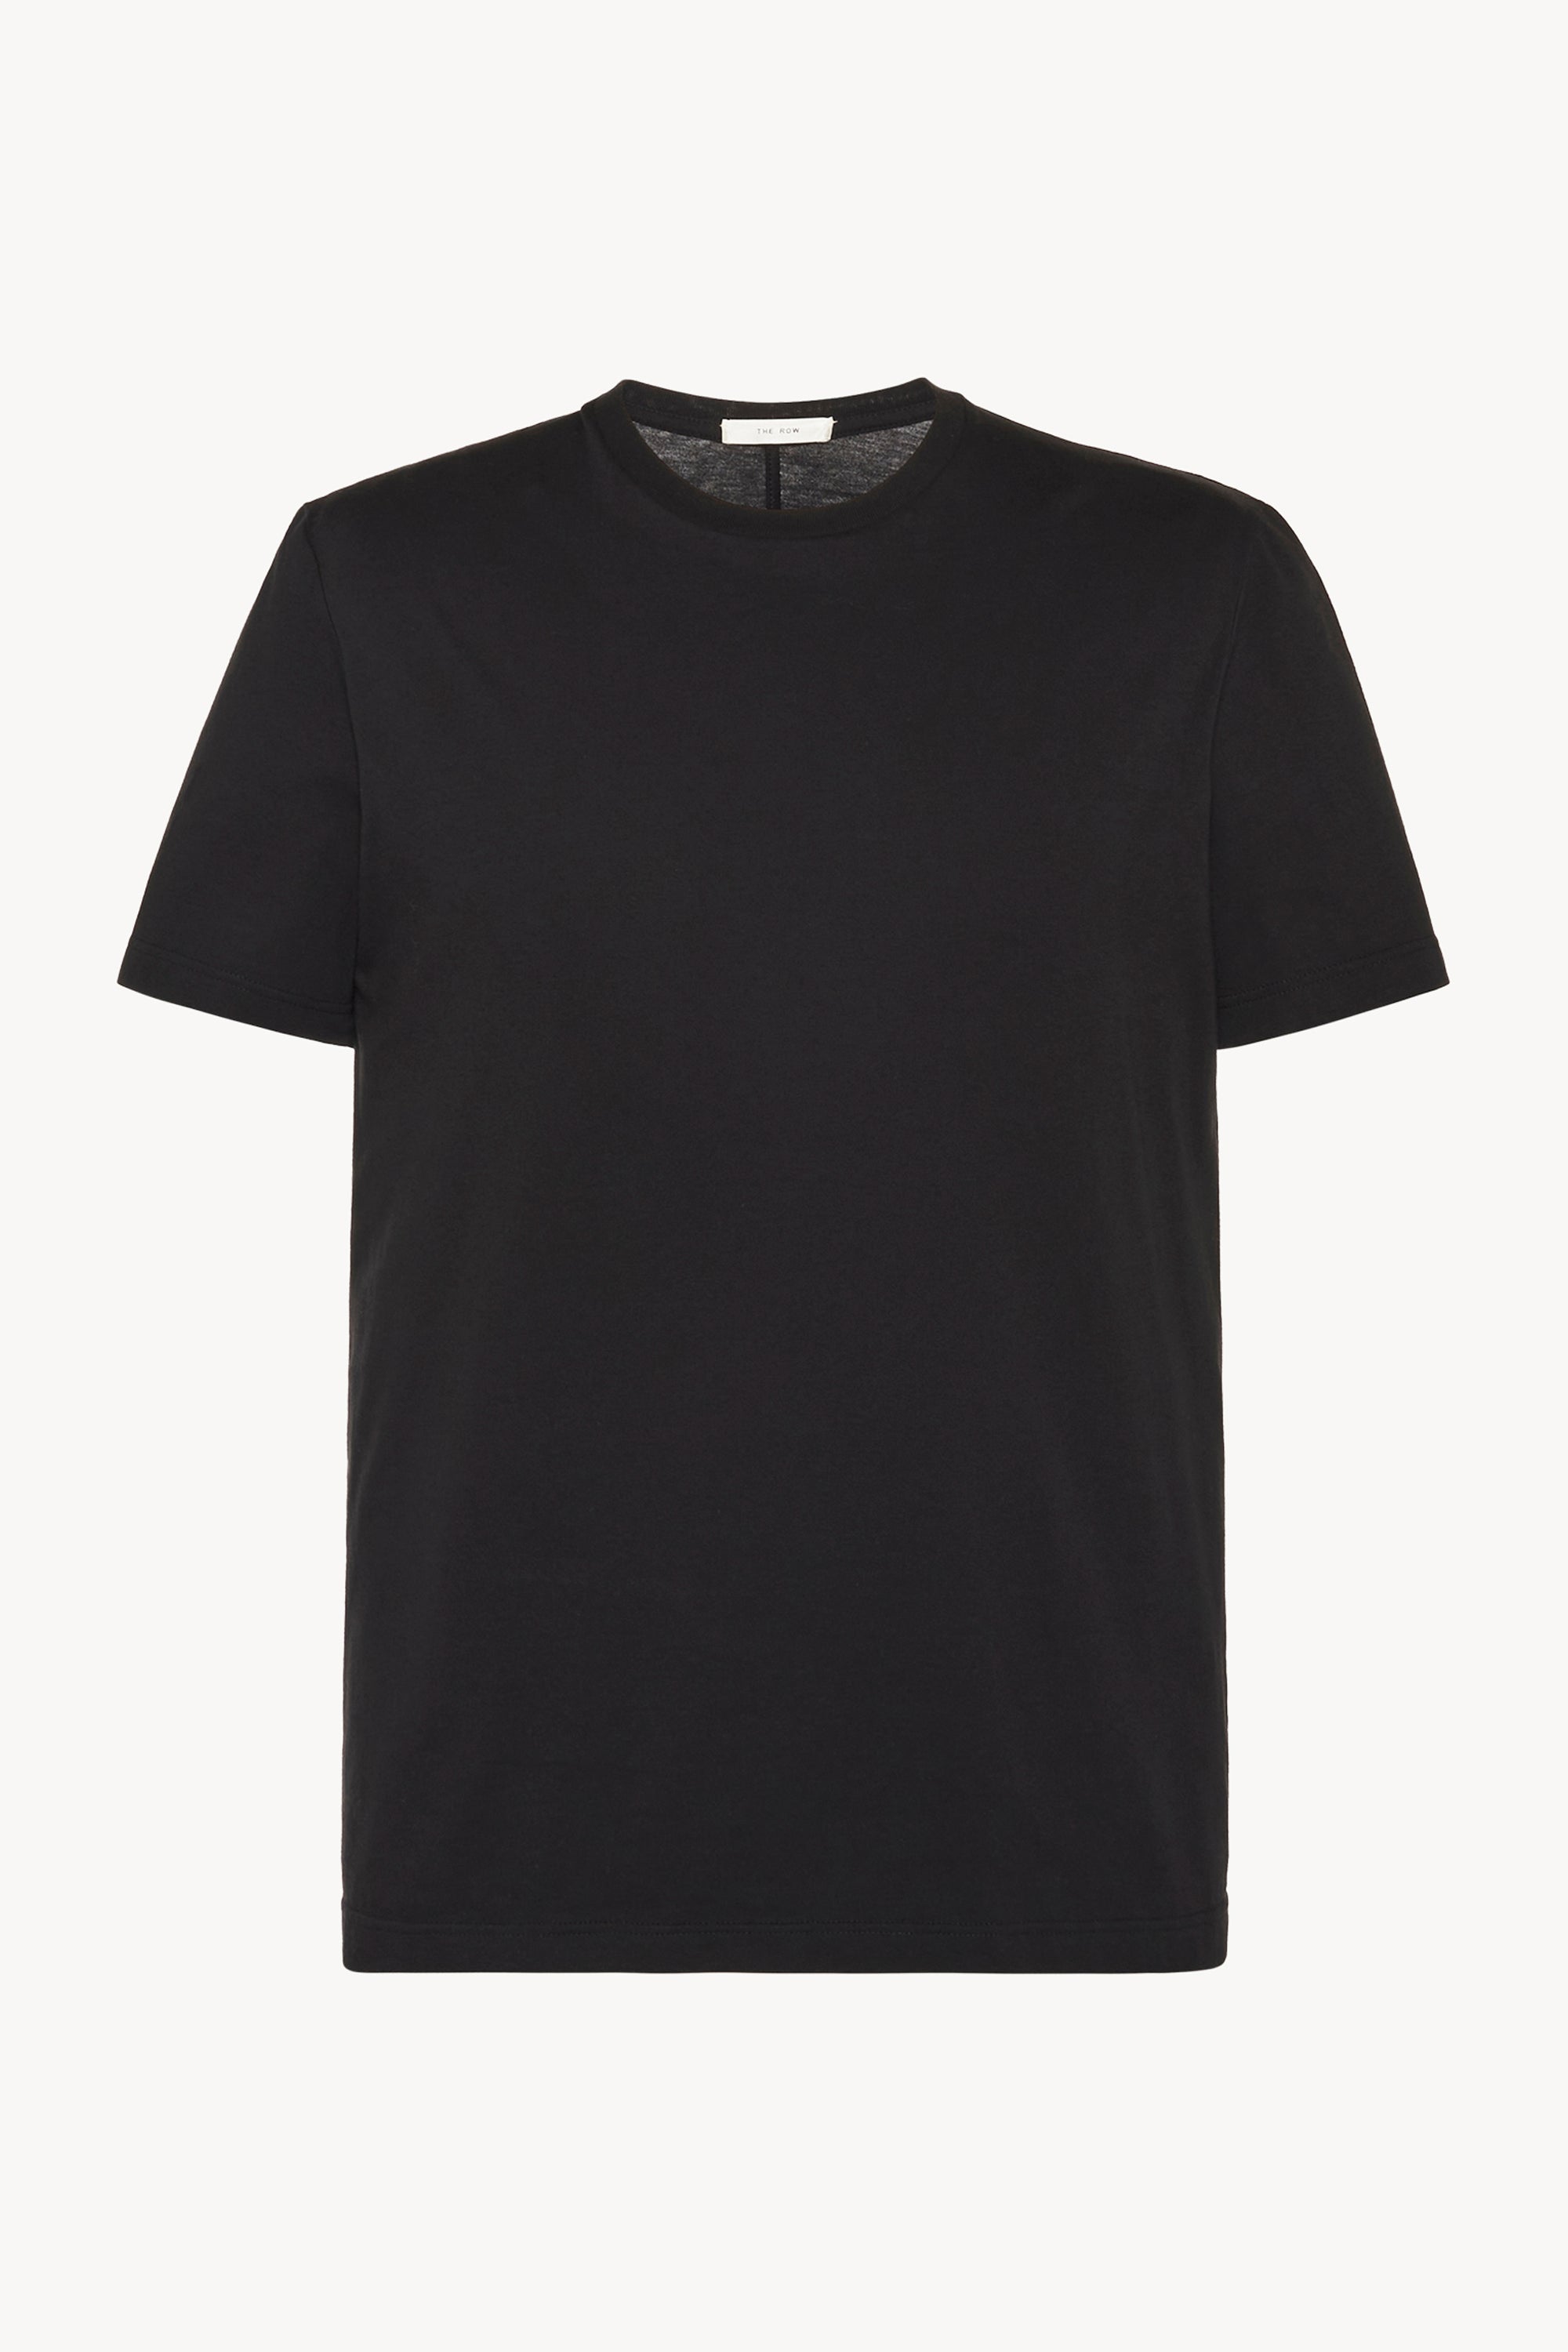 Luke T-Shirt Black in Cotton – The Row